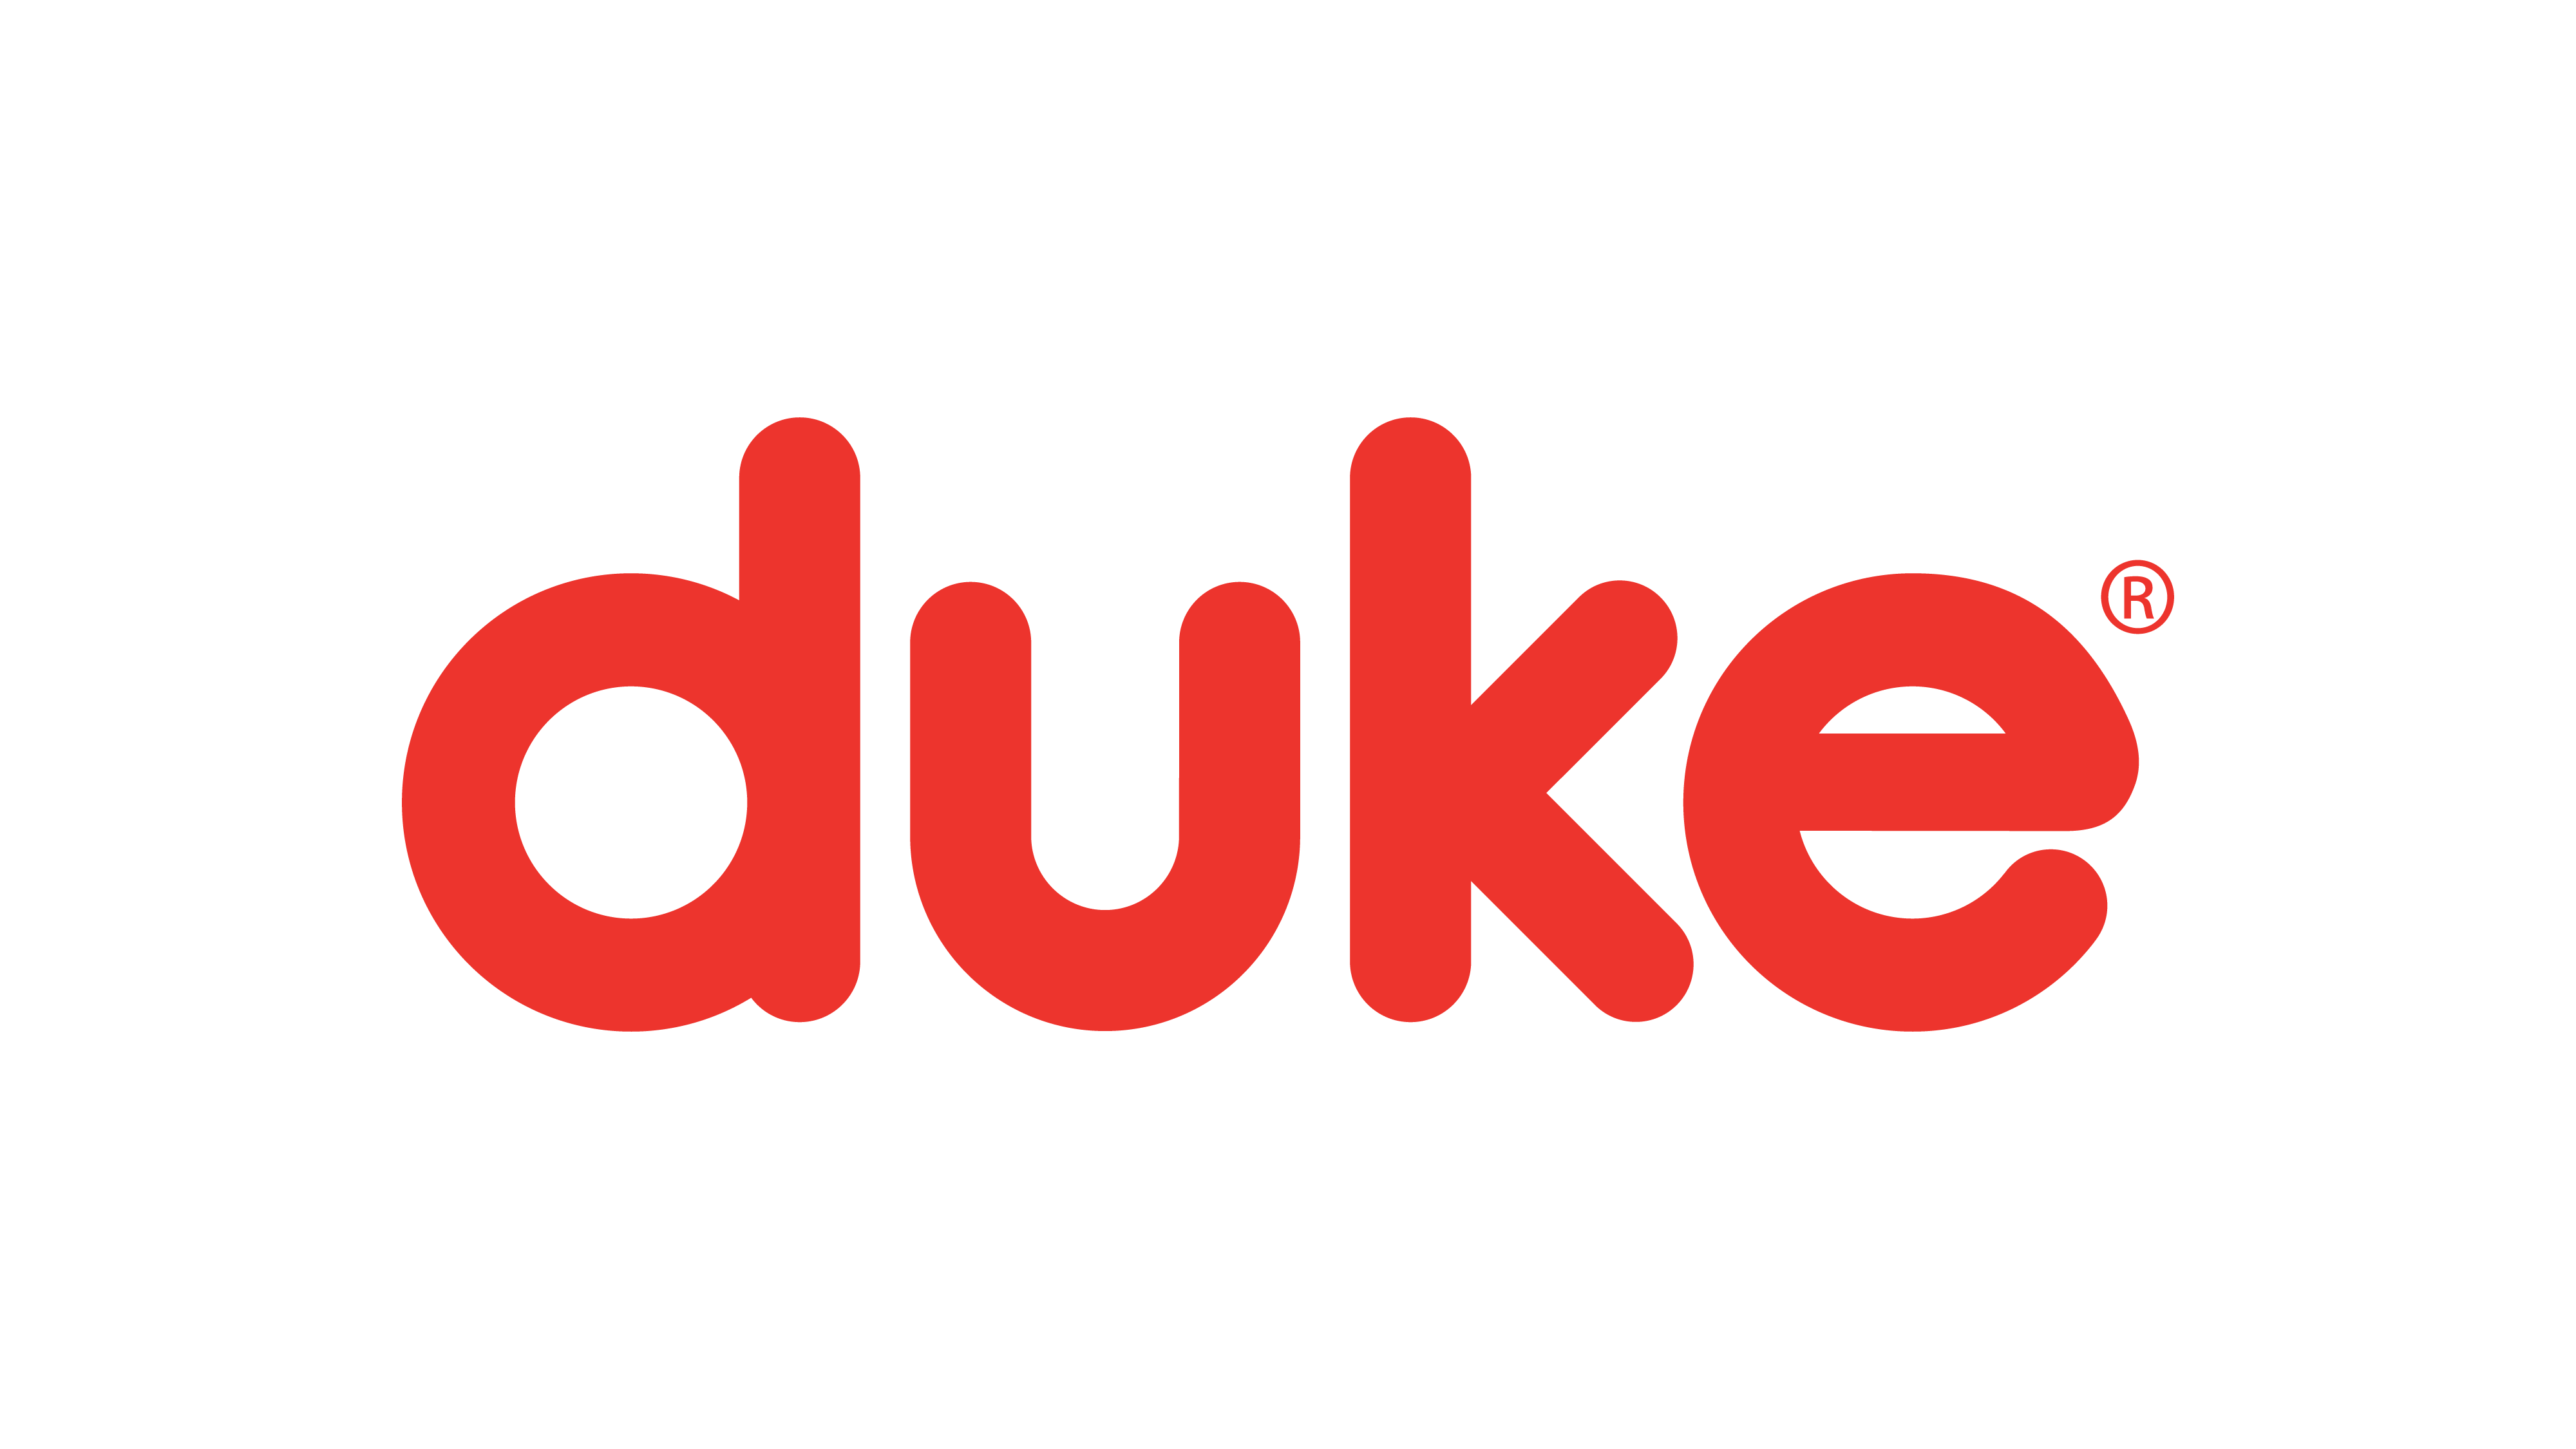 Logo Duke